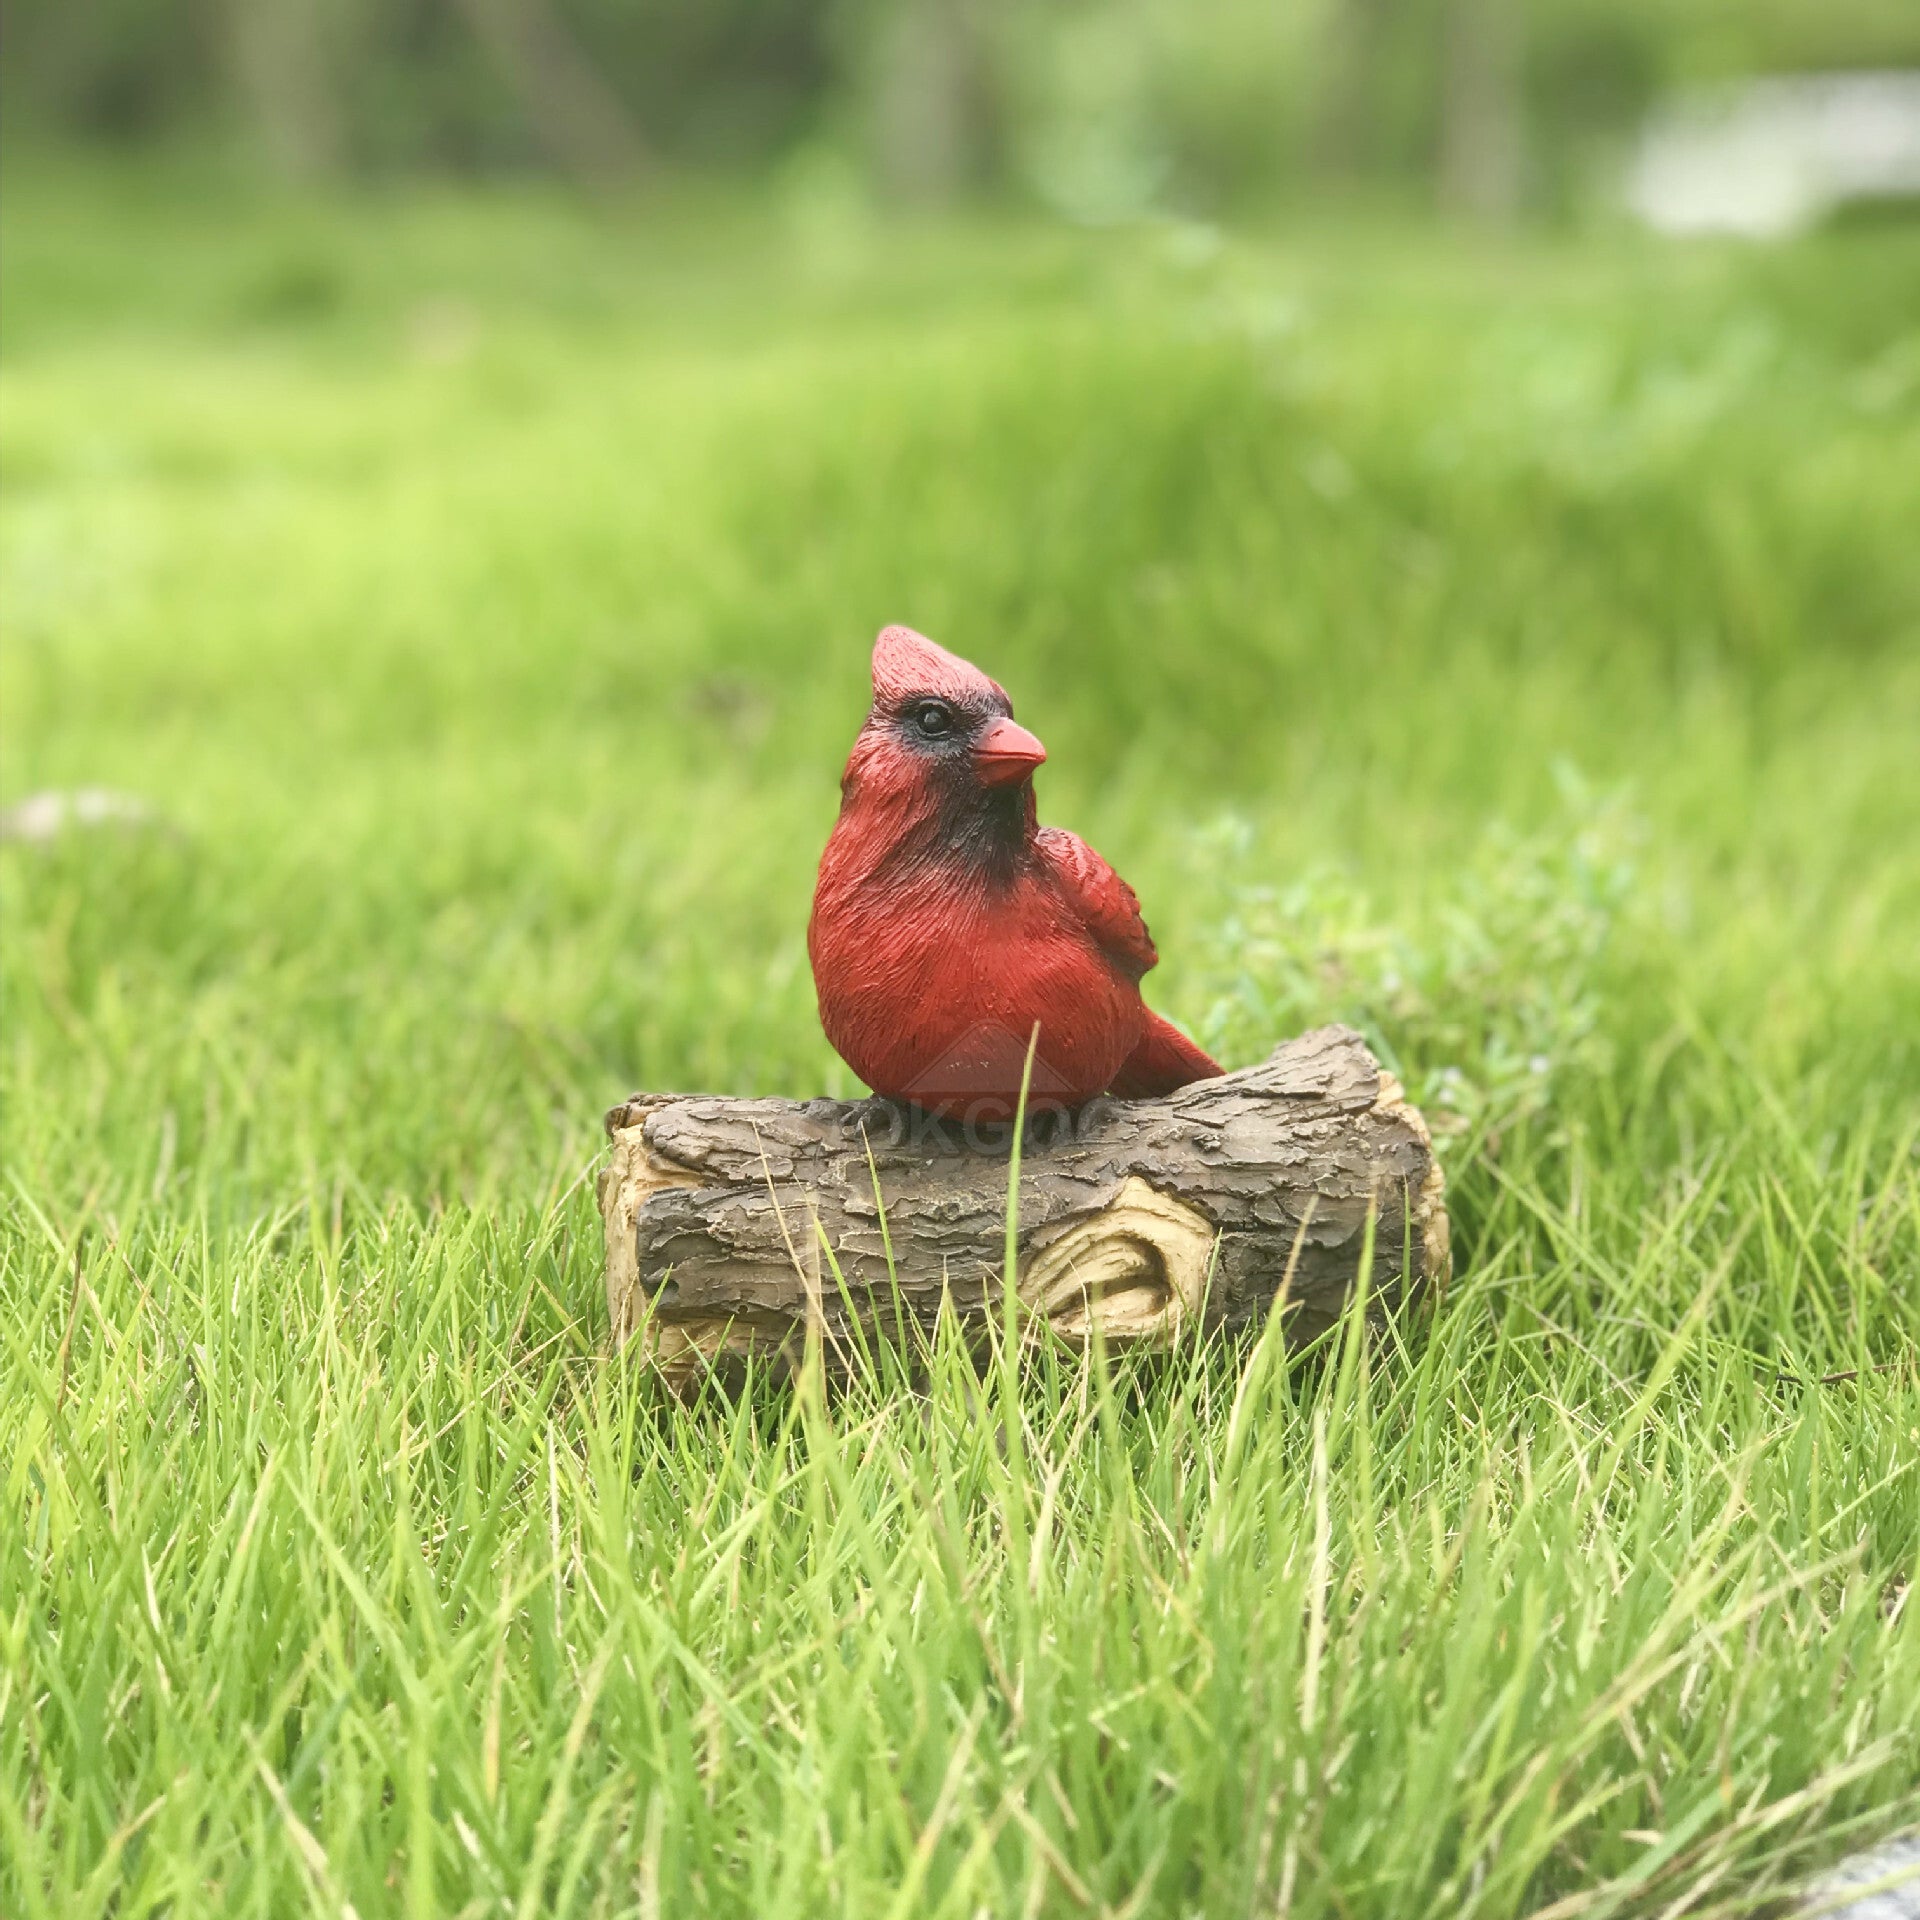 Family Guardian - Handcrafted Cardinal Figurine